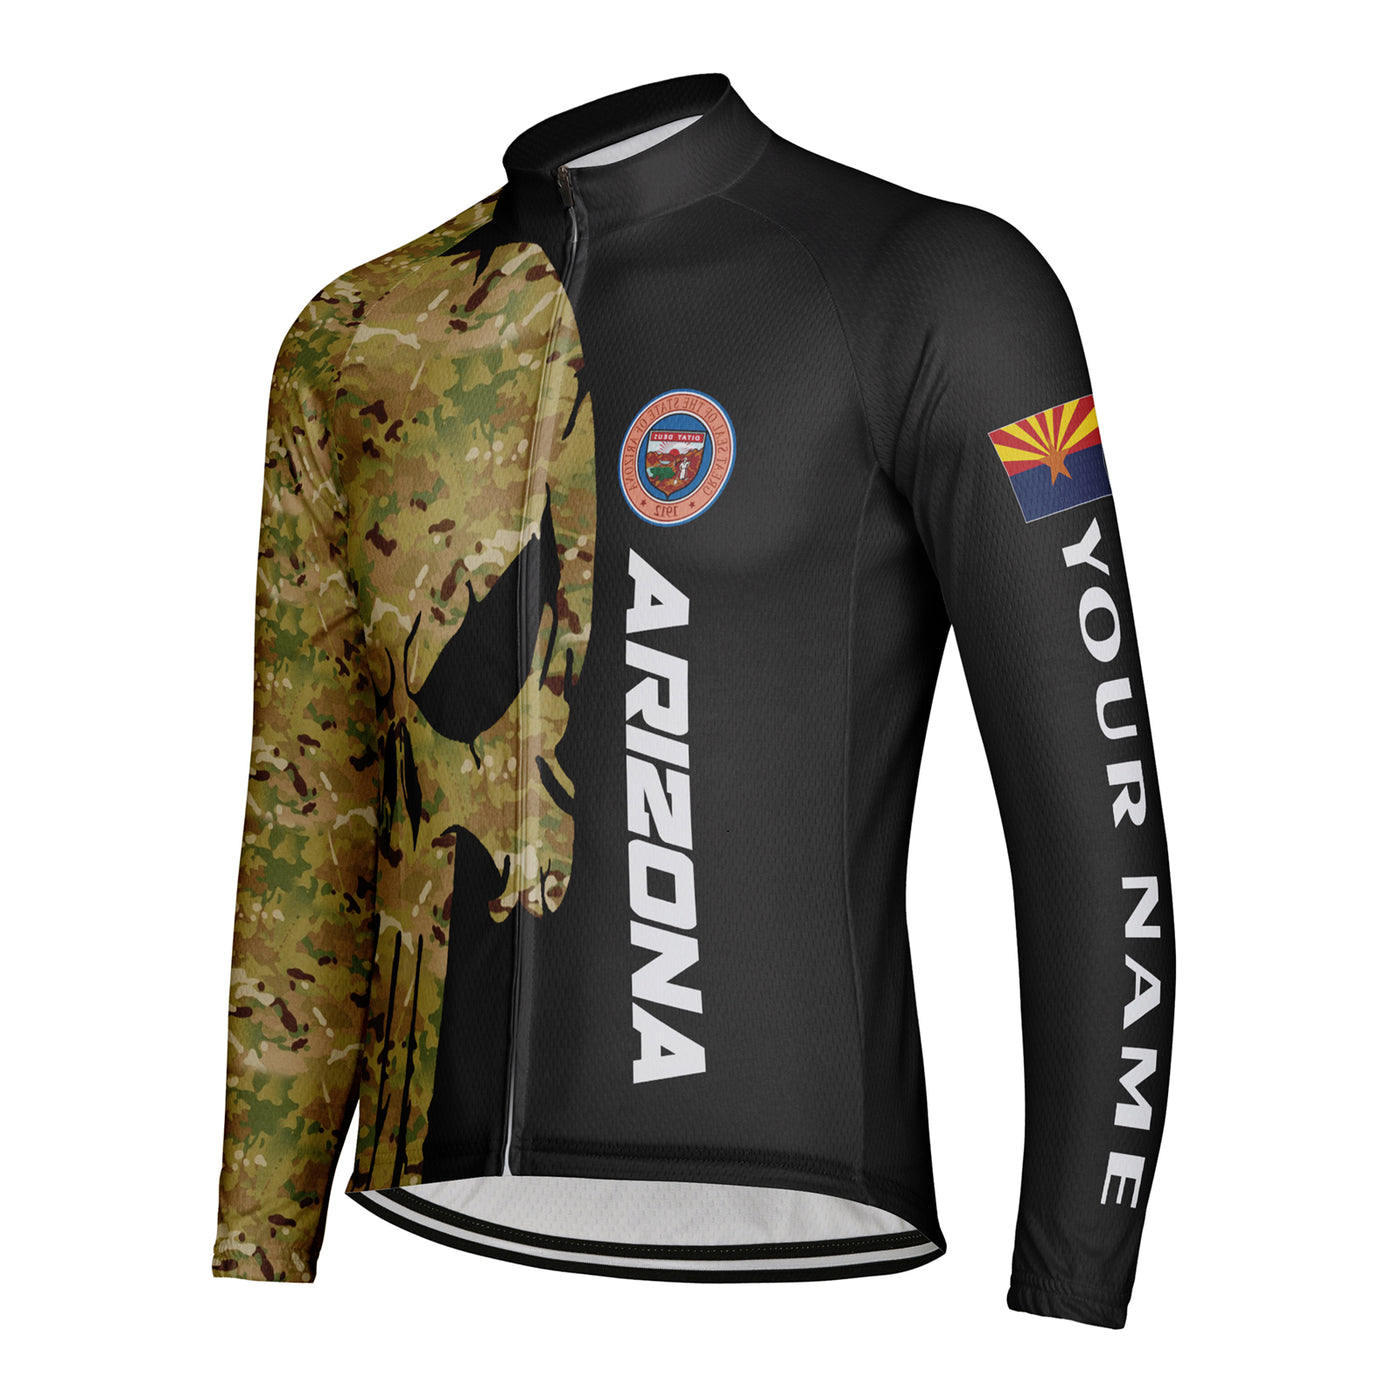 Customized Arizona Men's Cycling Jersey Long Sleeve